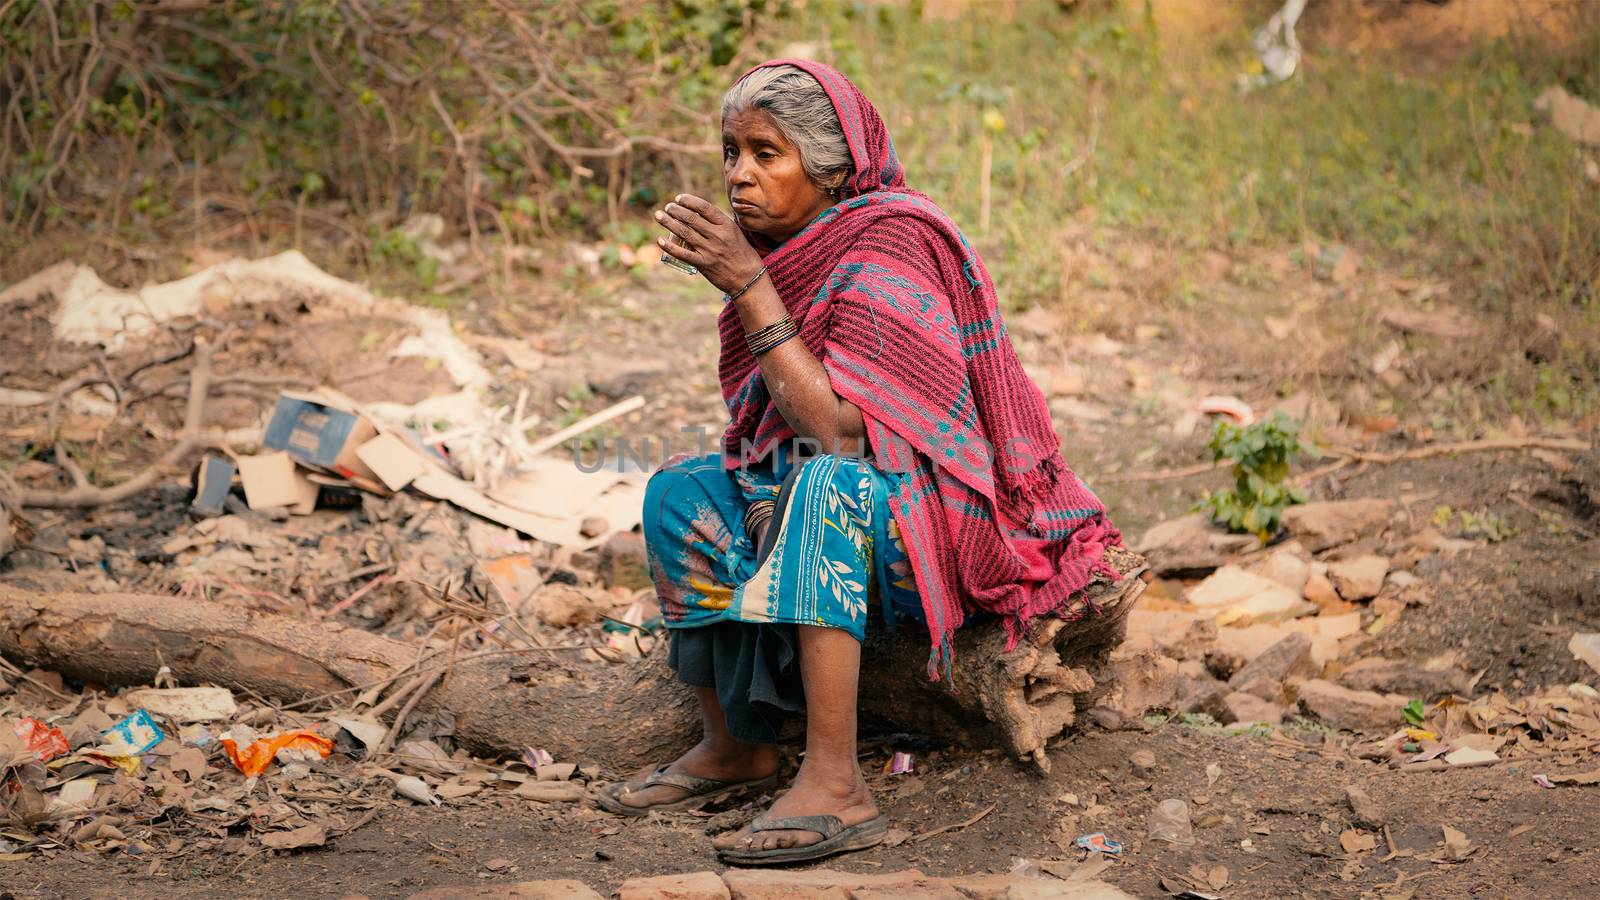 An Old female Indian beggar sitting and having tea. by ziprashantzi